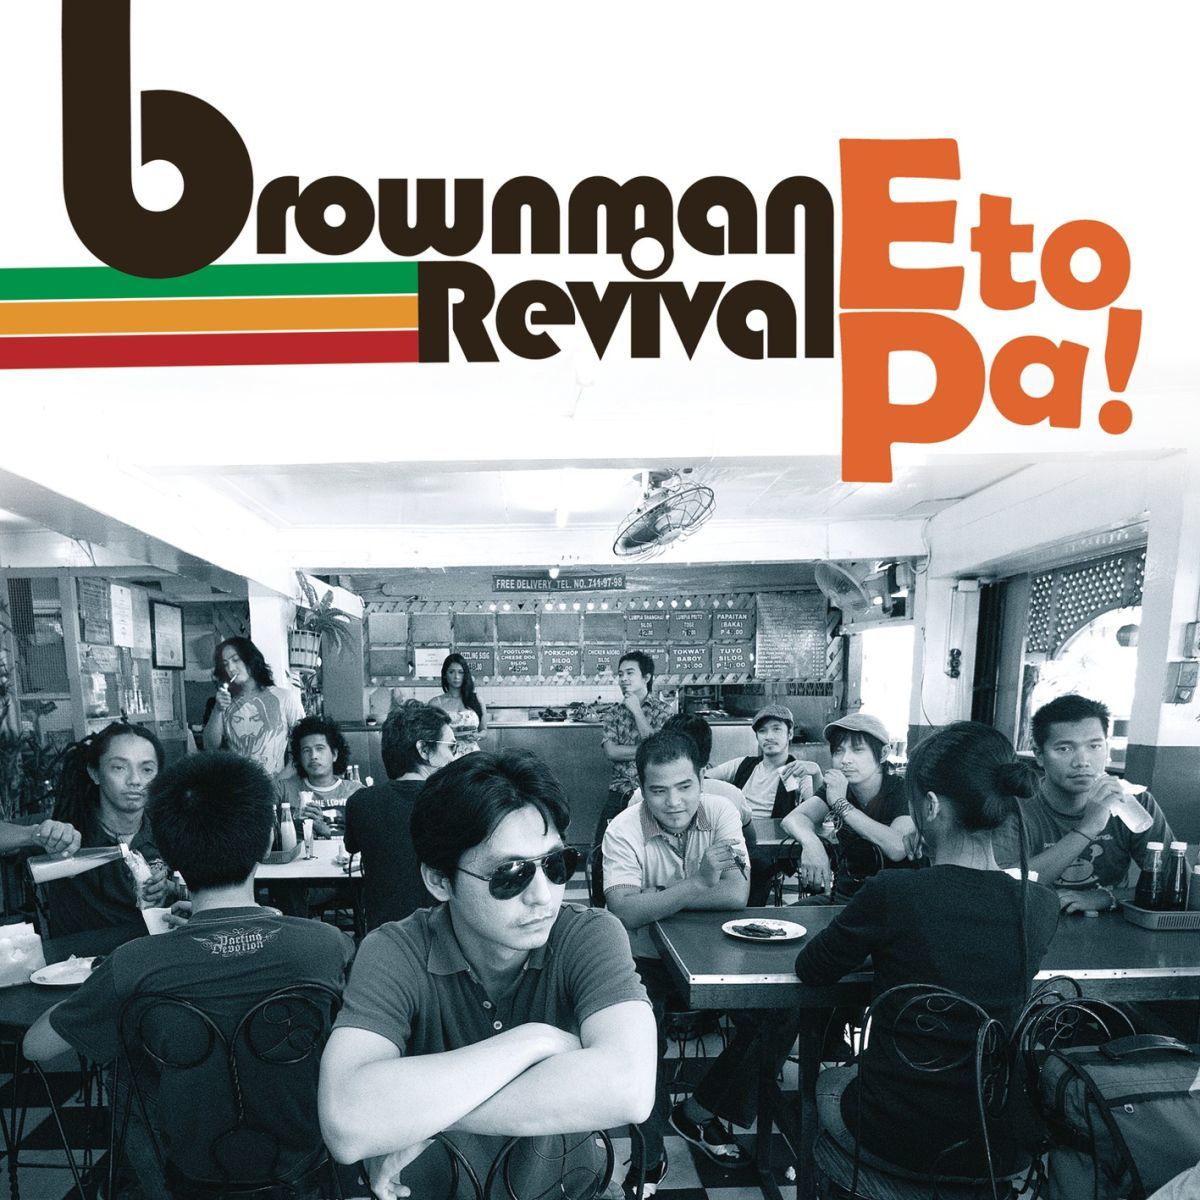 Brownman Revival - Eto Pa - 2010 Album